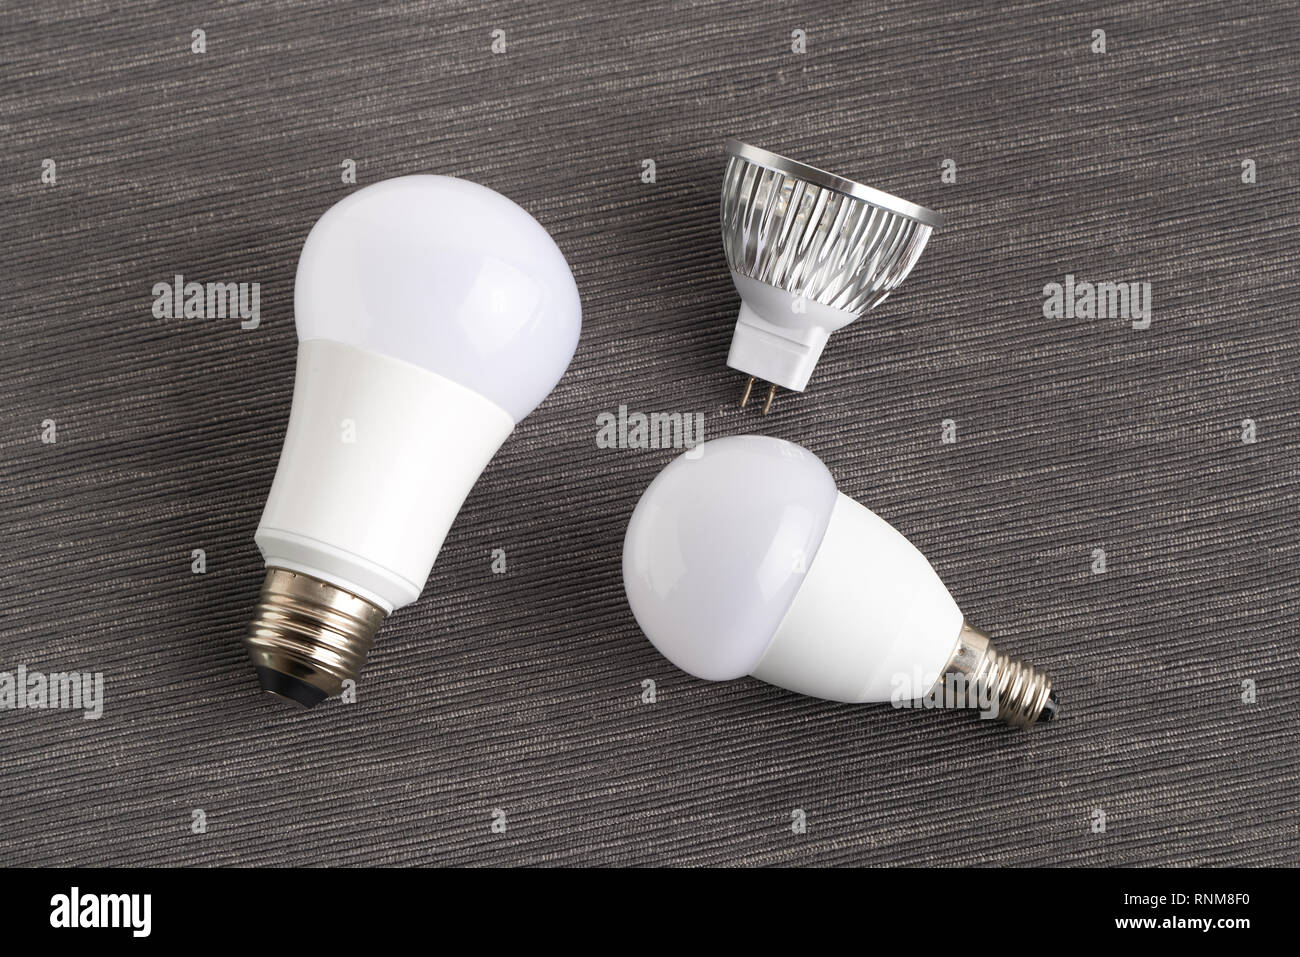 E26, E14 and MR-16 LED bulbs on a background Stock Photo